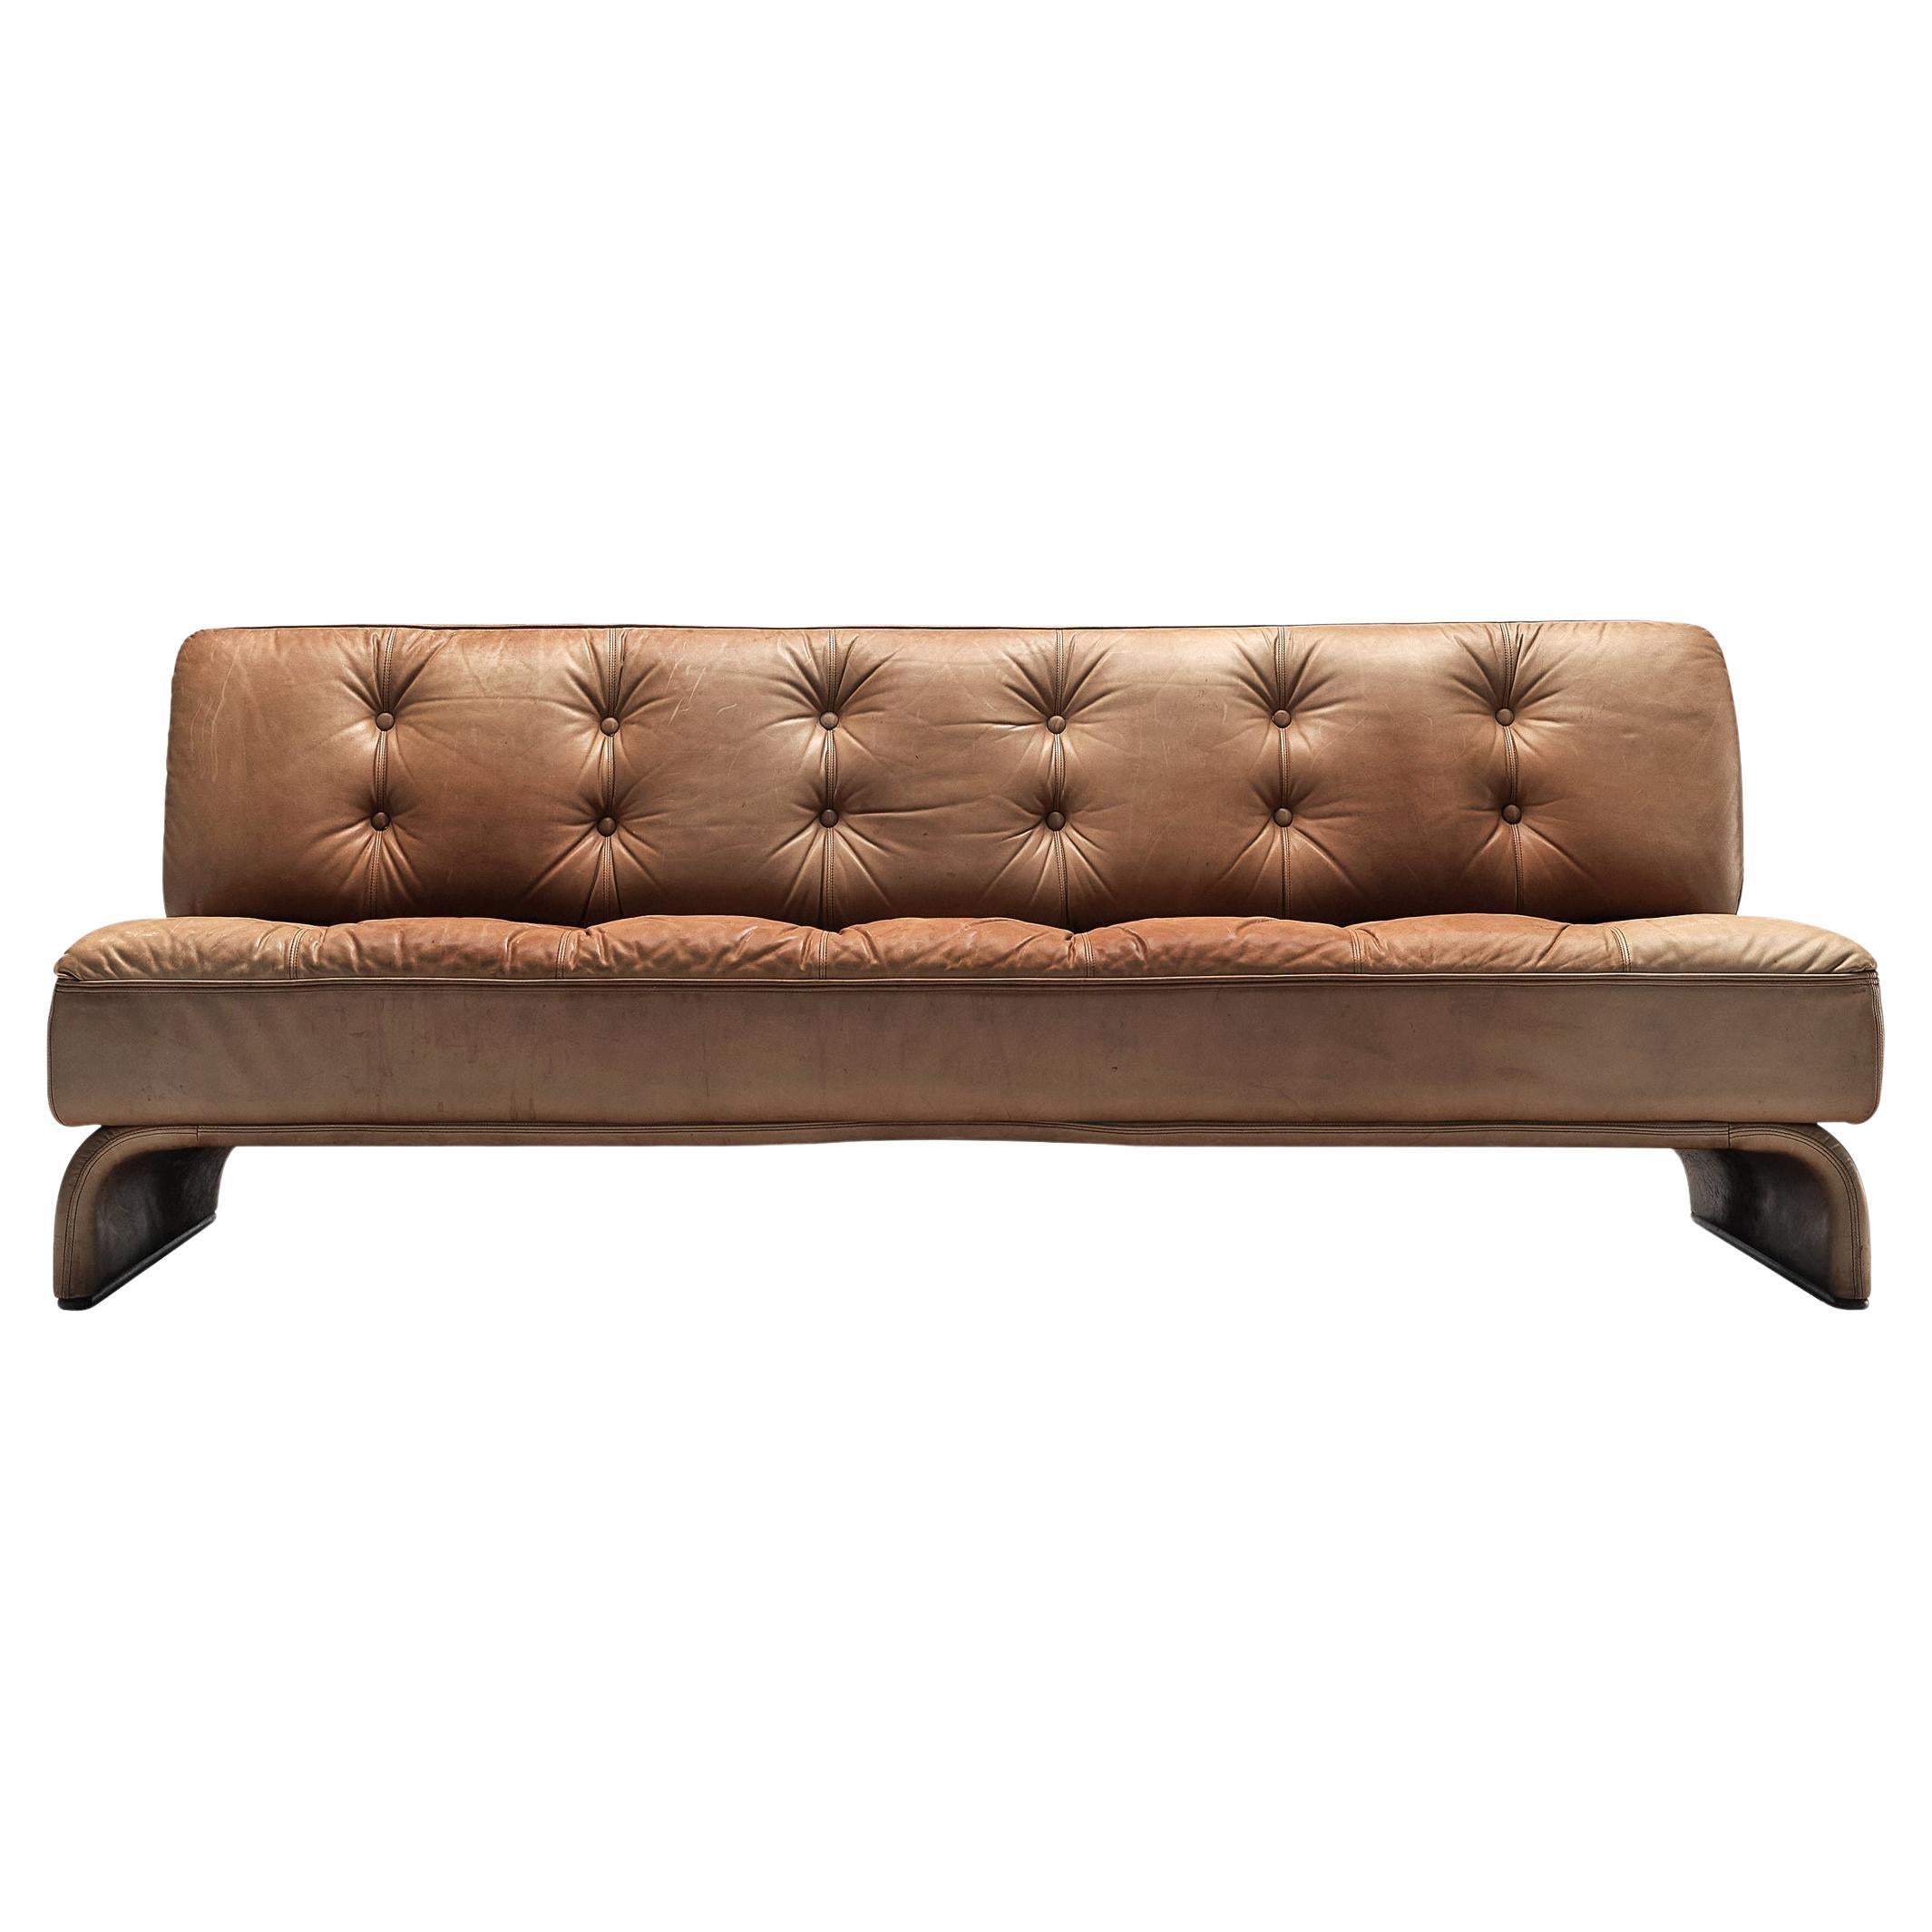 Johannes Spalt for Wittmann 'Constanze' Sofa in Cognac Leather